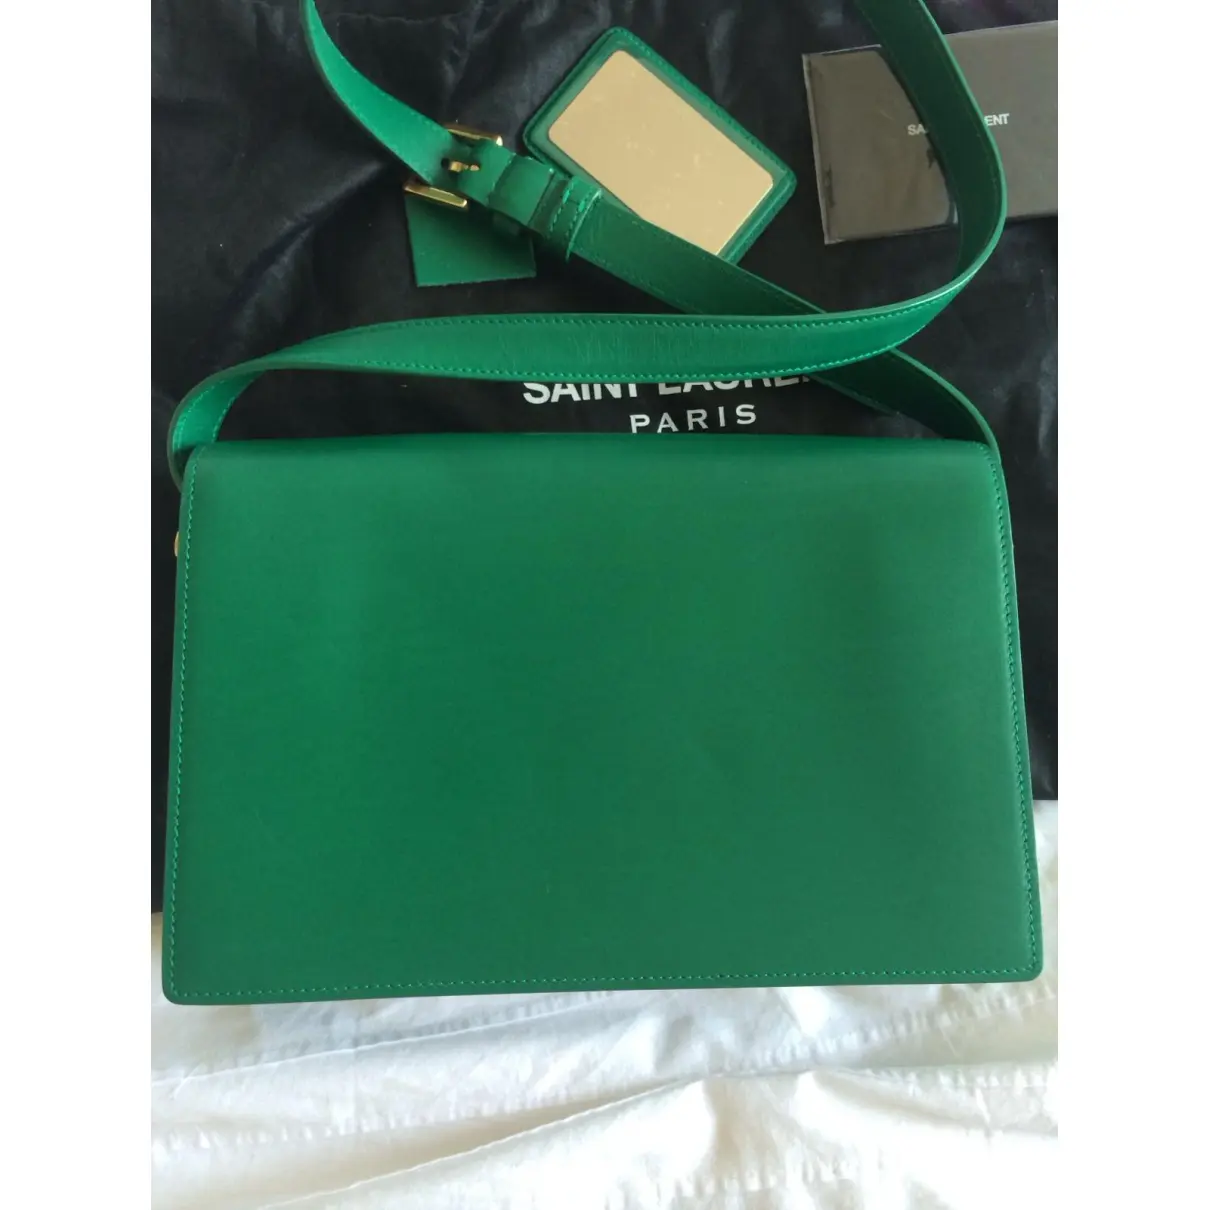 Buy Saint Laurent Lulu leather handbag online